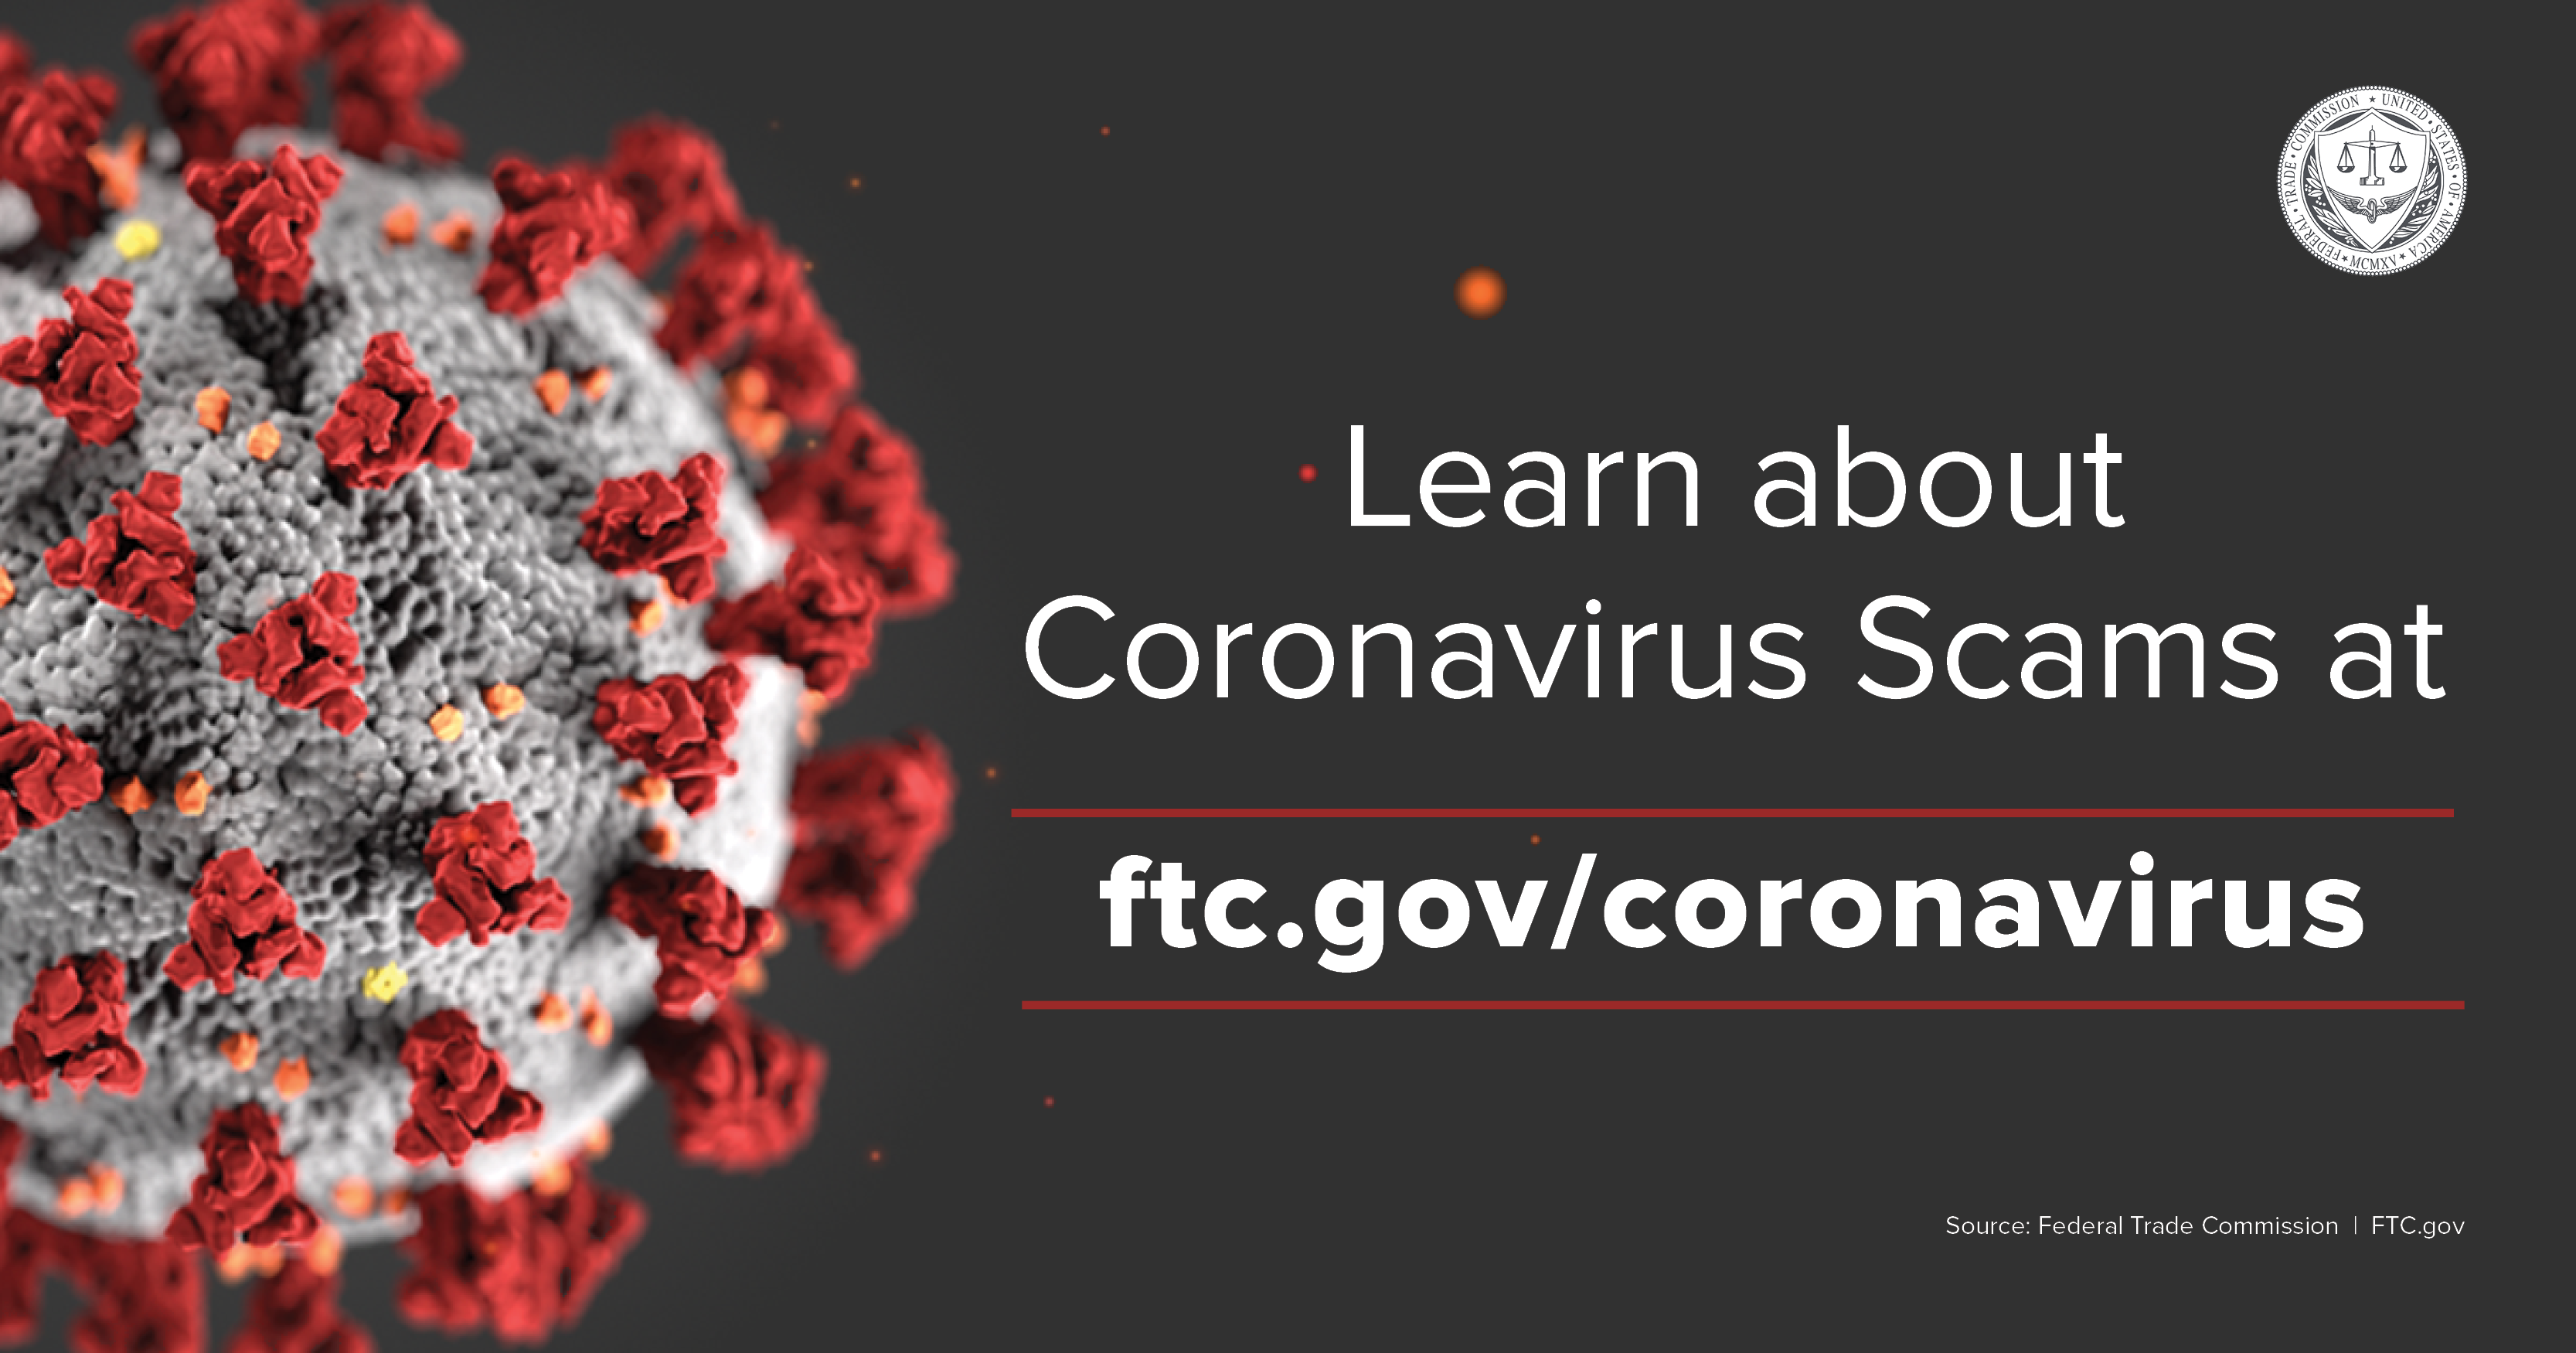 Learn about Coronavirus Scams at ftc.gov/coronavirus